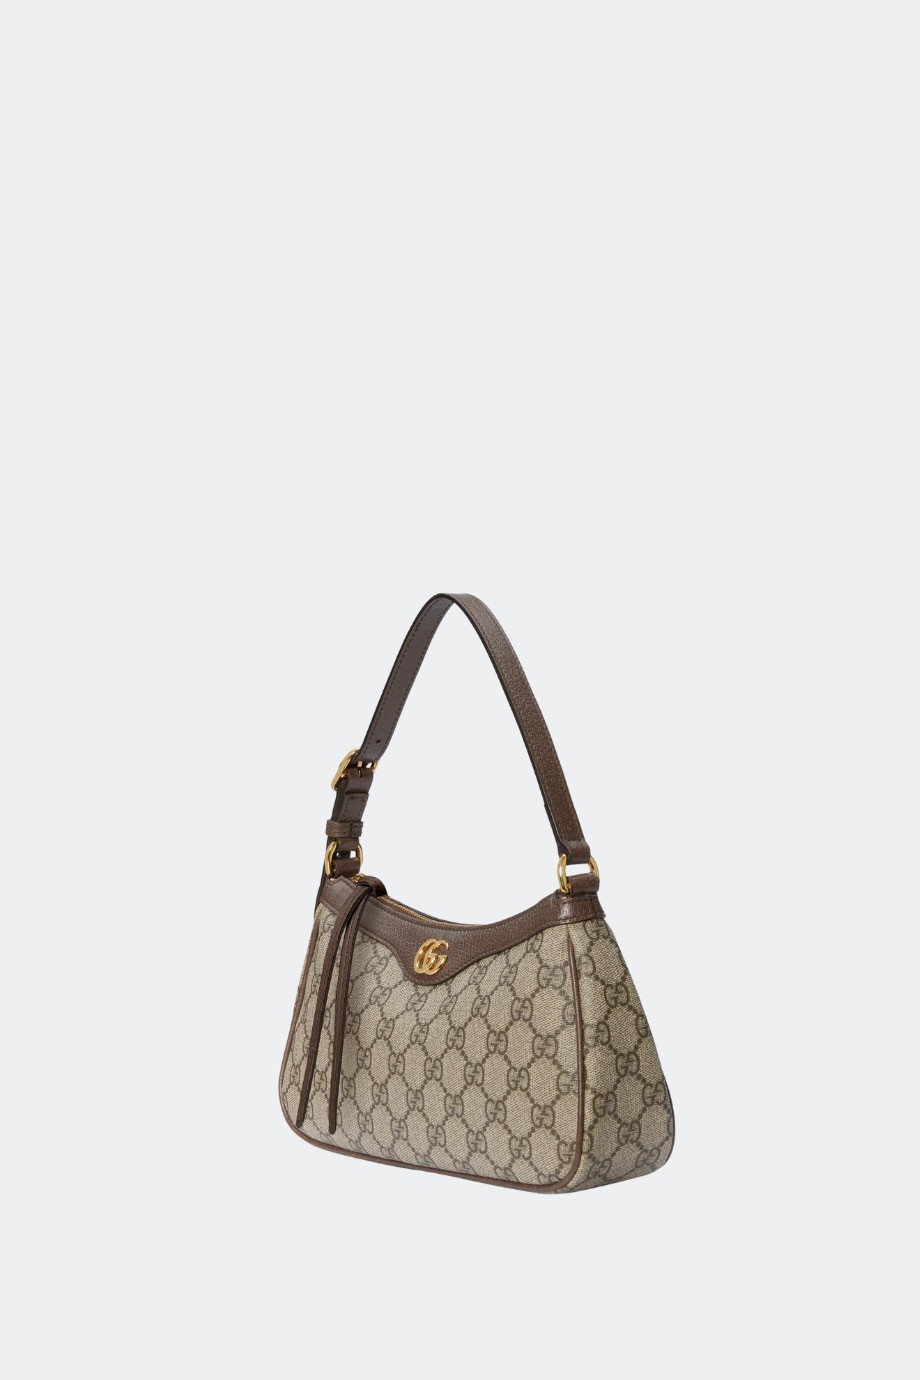 Gucci - Small Ophidia Handbag - Brown/Beige